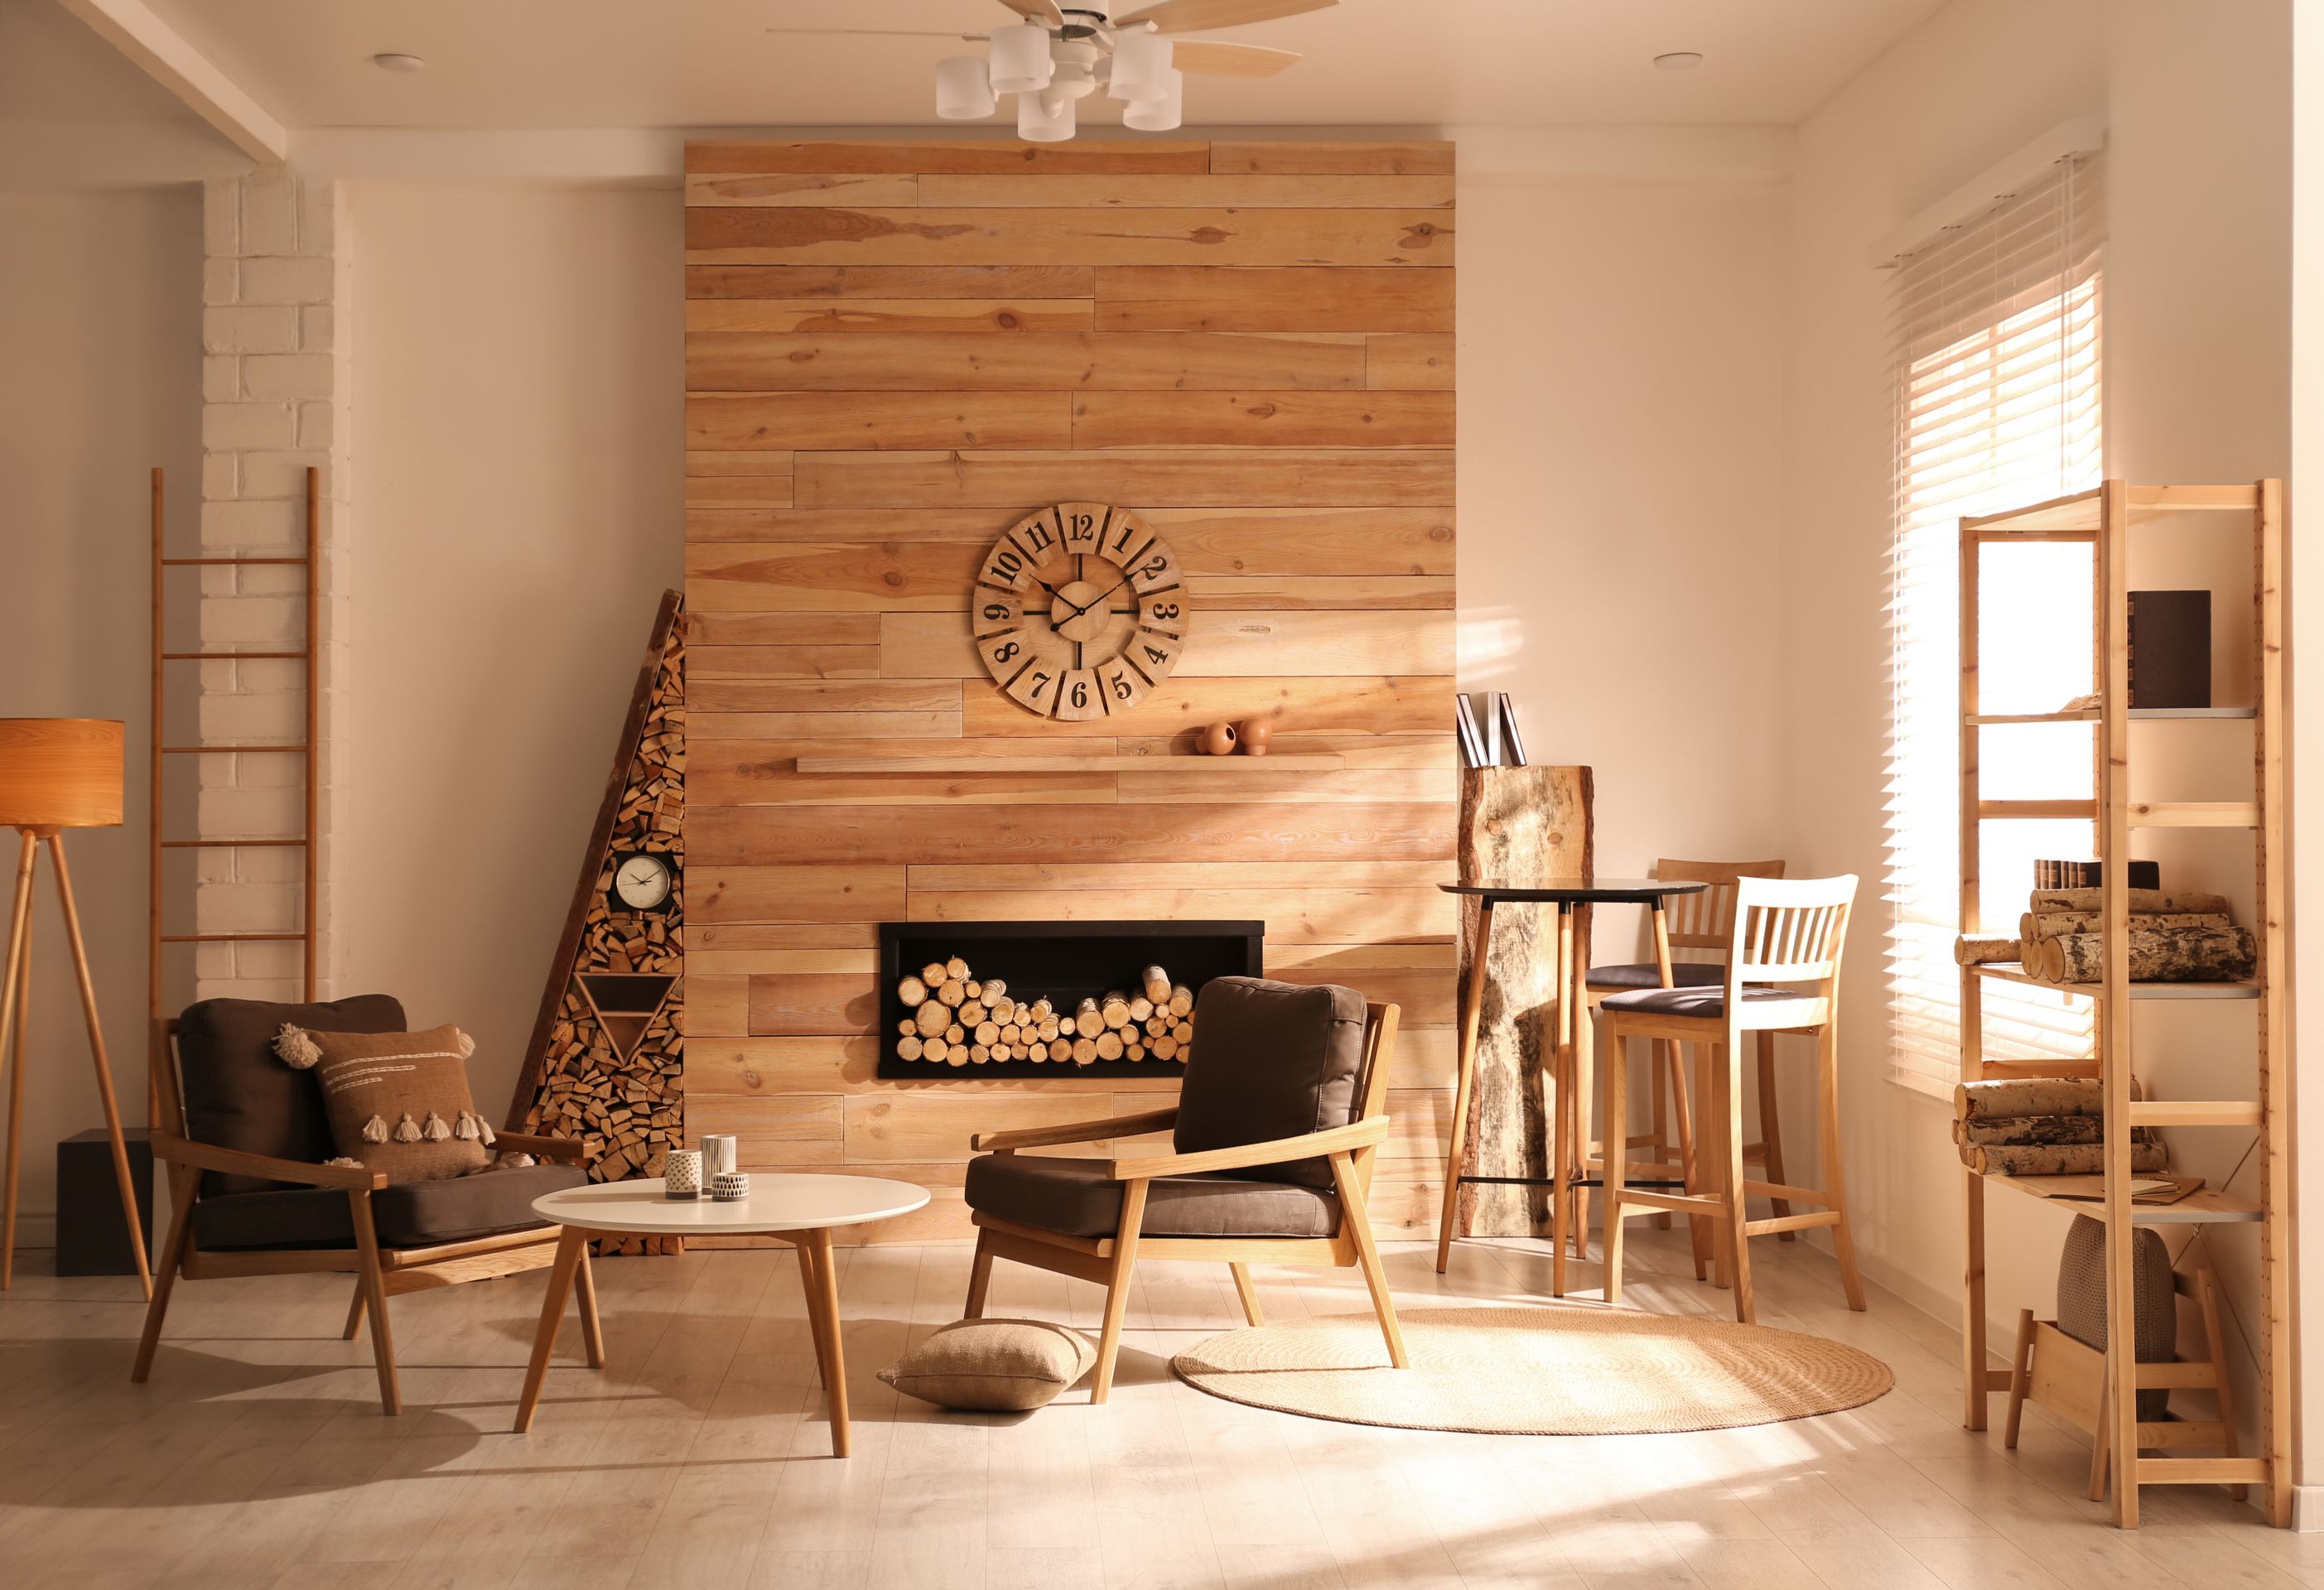 Boho Wall Decor Top 7 Ideas & Tips - MK Envision Galleries